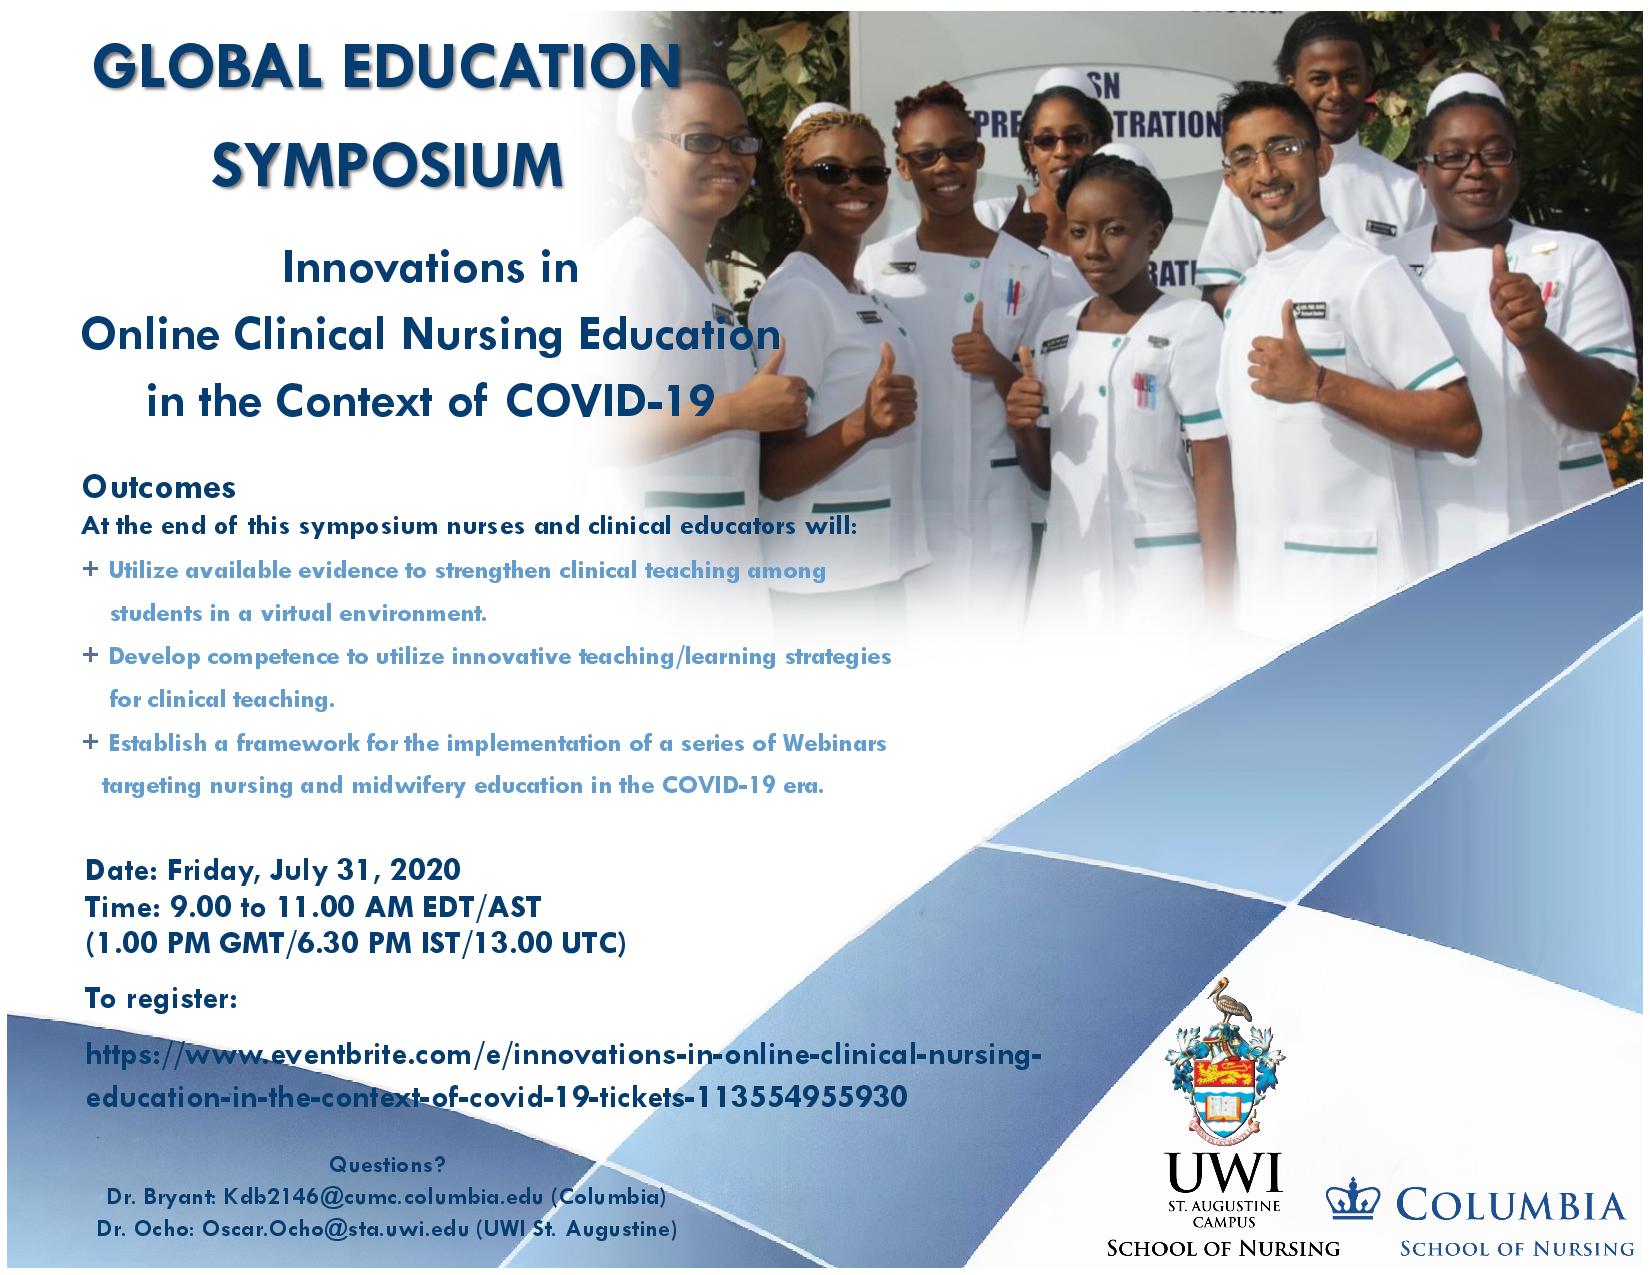 Global Education Symposium UWISON